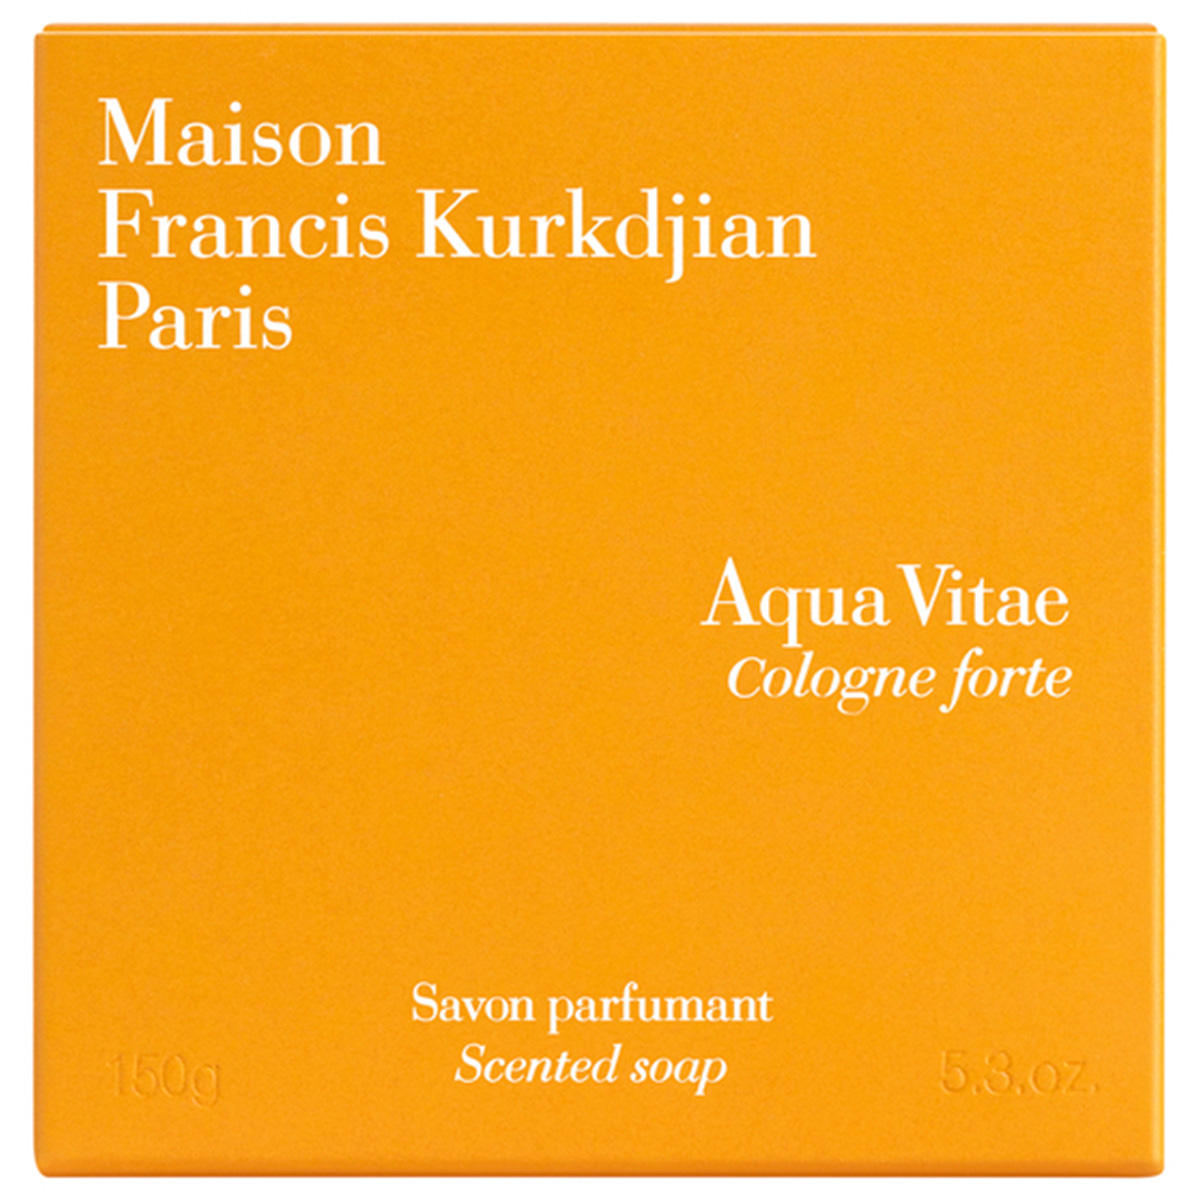 Maison Francis Kurkdjian Paris Aqua Vitae Cologne forte Soap 150 g - 2